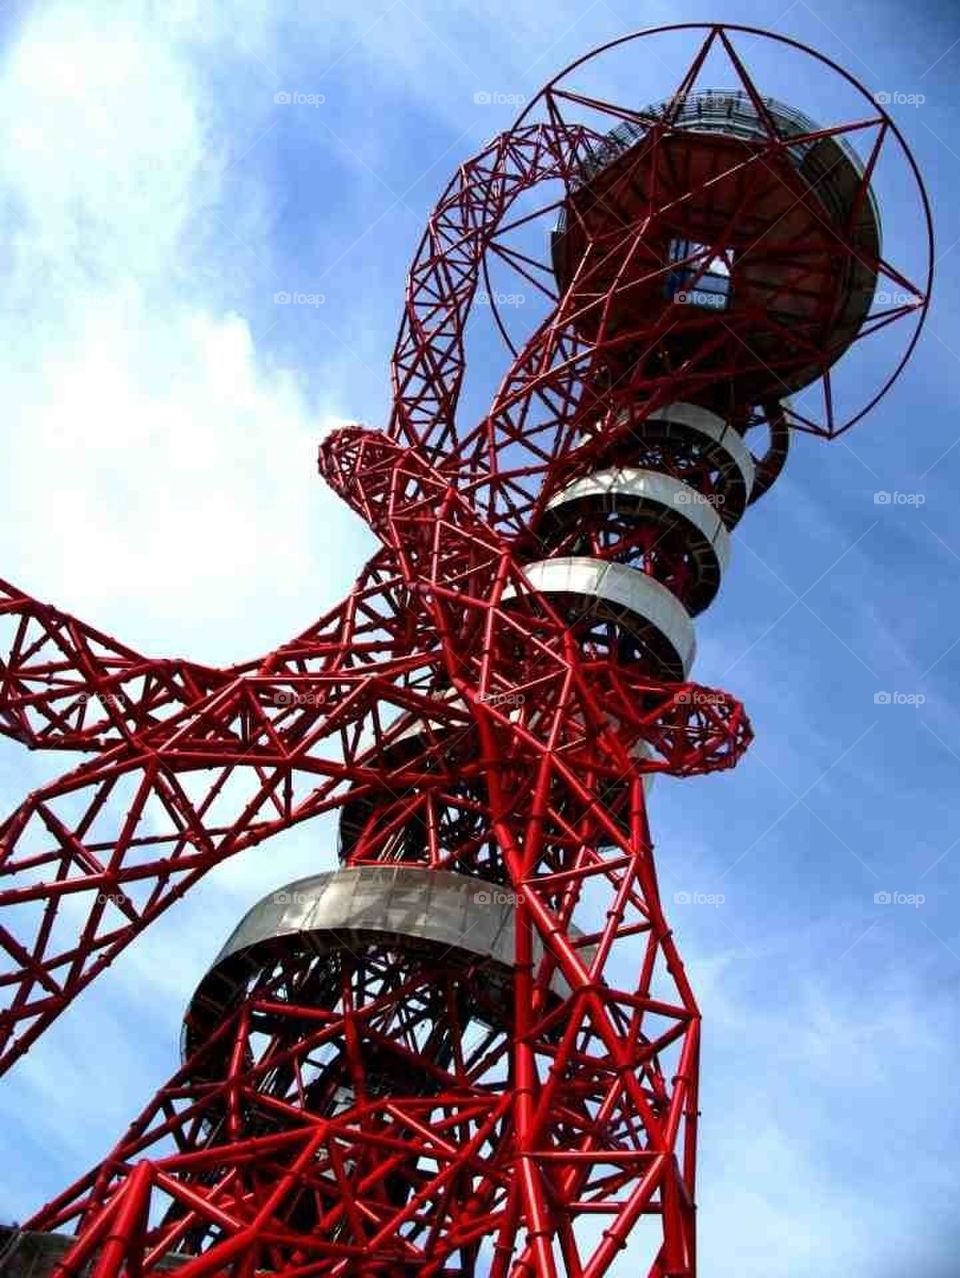 london art design olympics by Deo0303